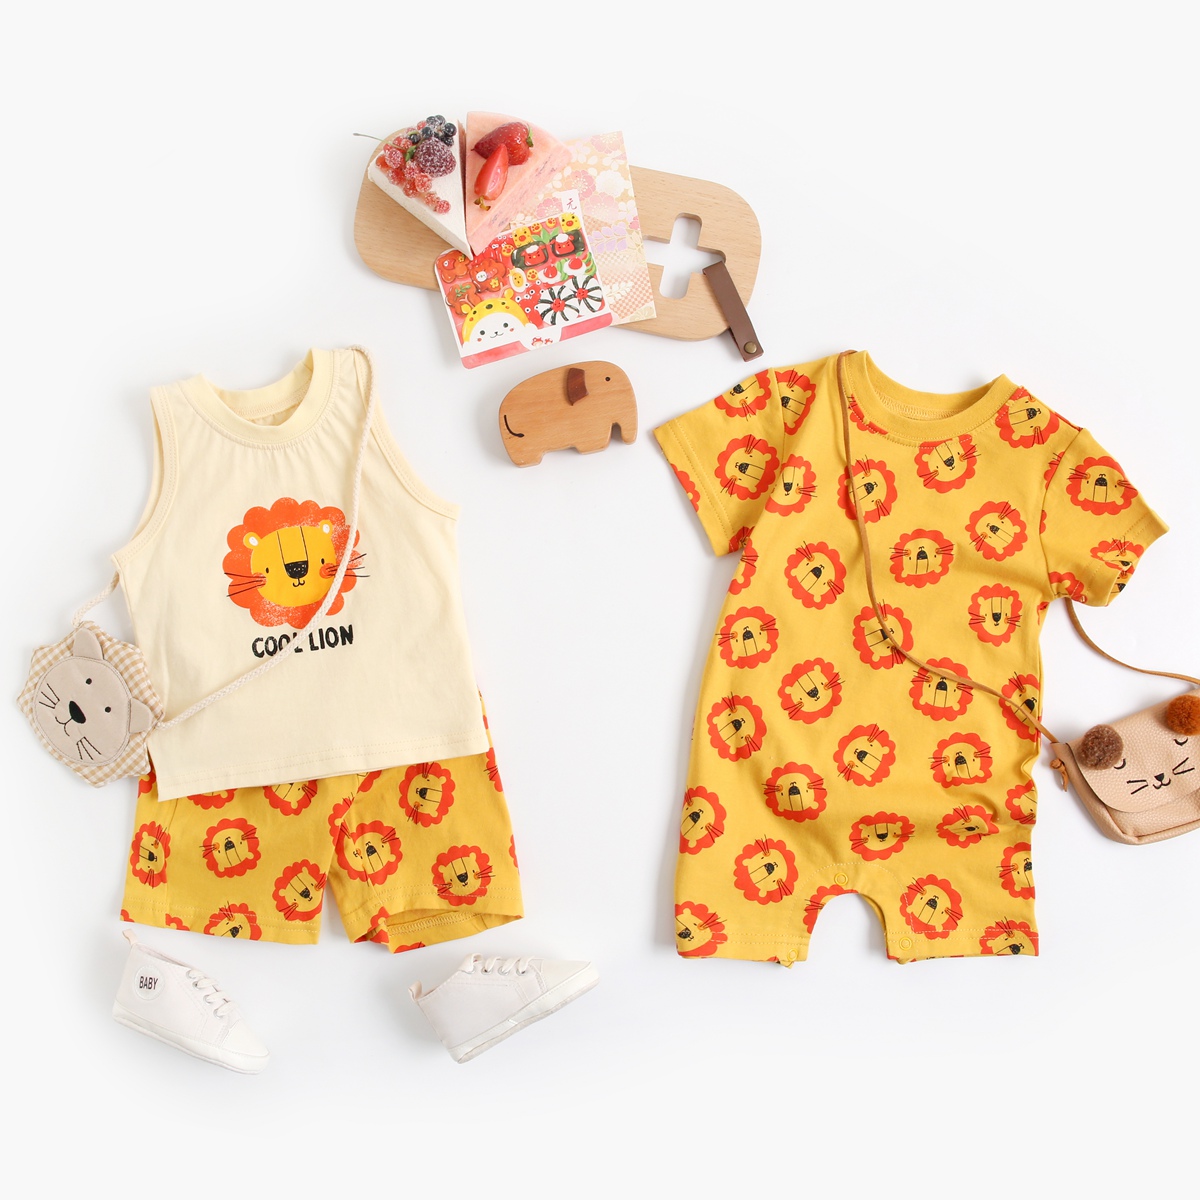 Sanlutoz Baby Boys Girls Clothing Set Cotton Toddler Summer Tops Shorts Cute Animal 2Pcs